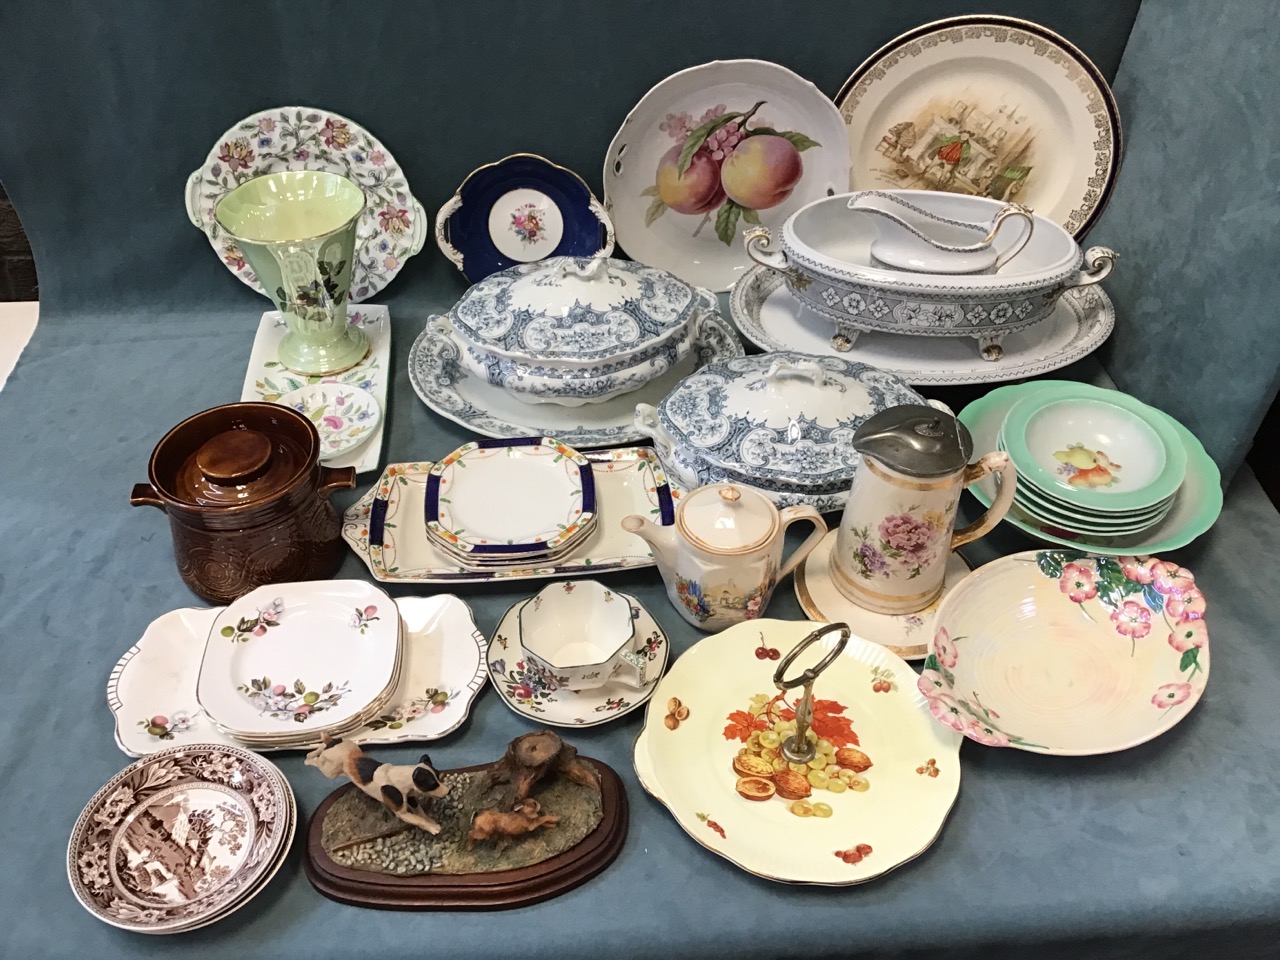 Miscellaneous ceramics - a Maling vase & blossom dish, a dessert set, a pair of Victorian tureens